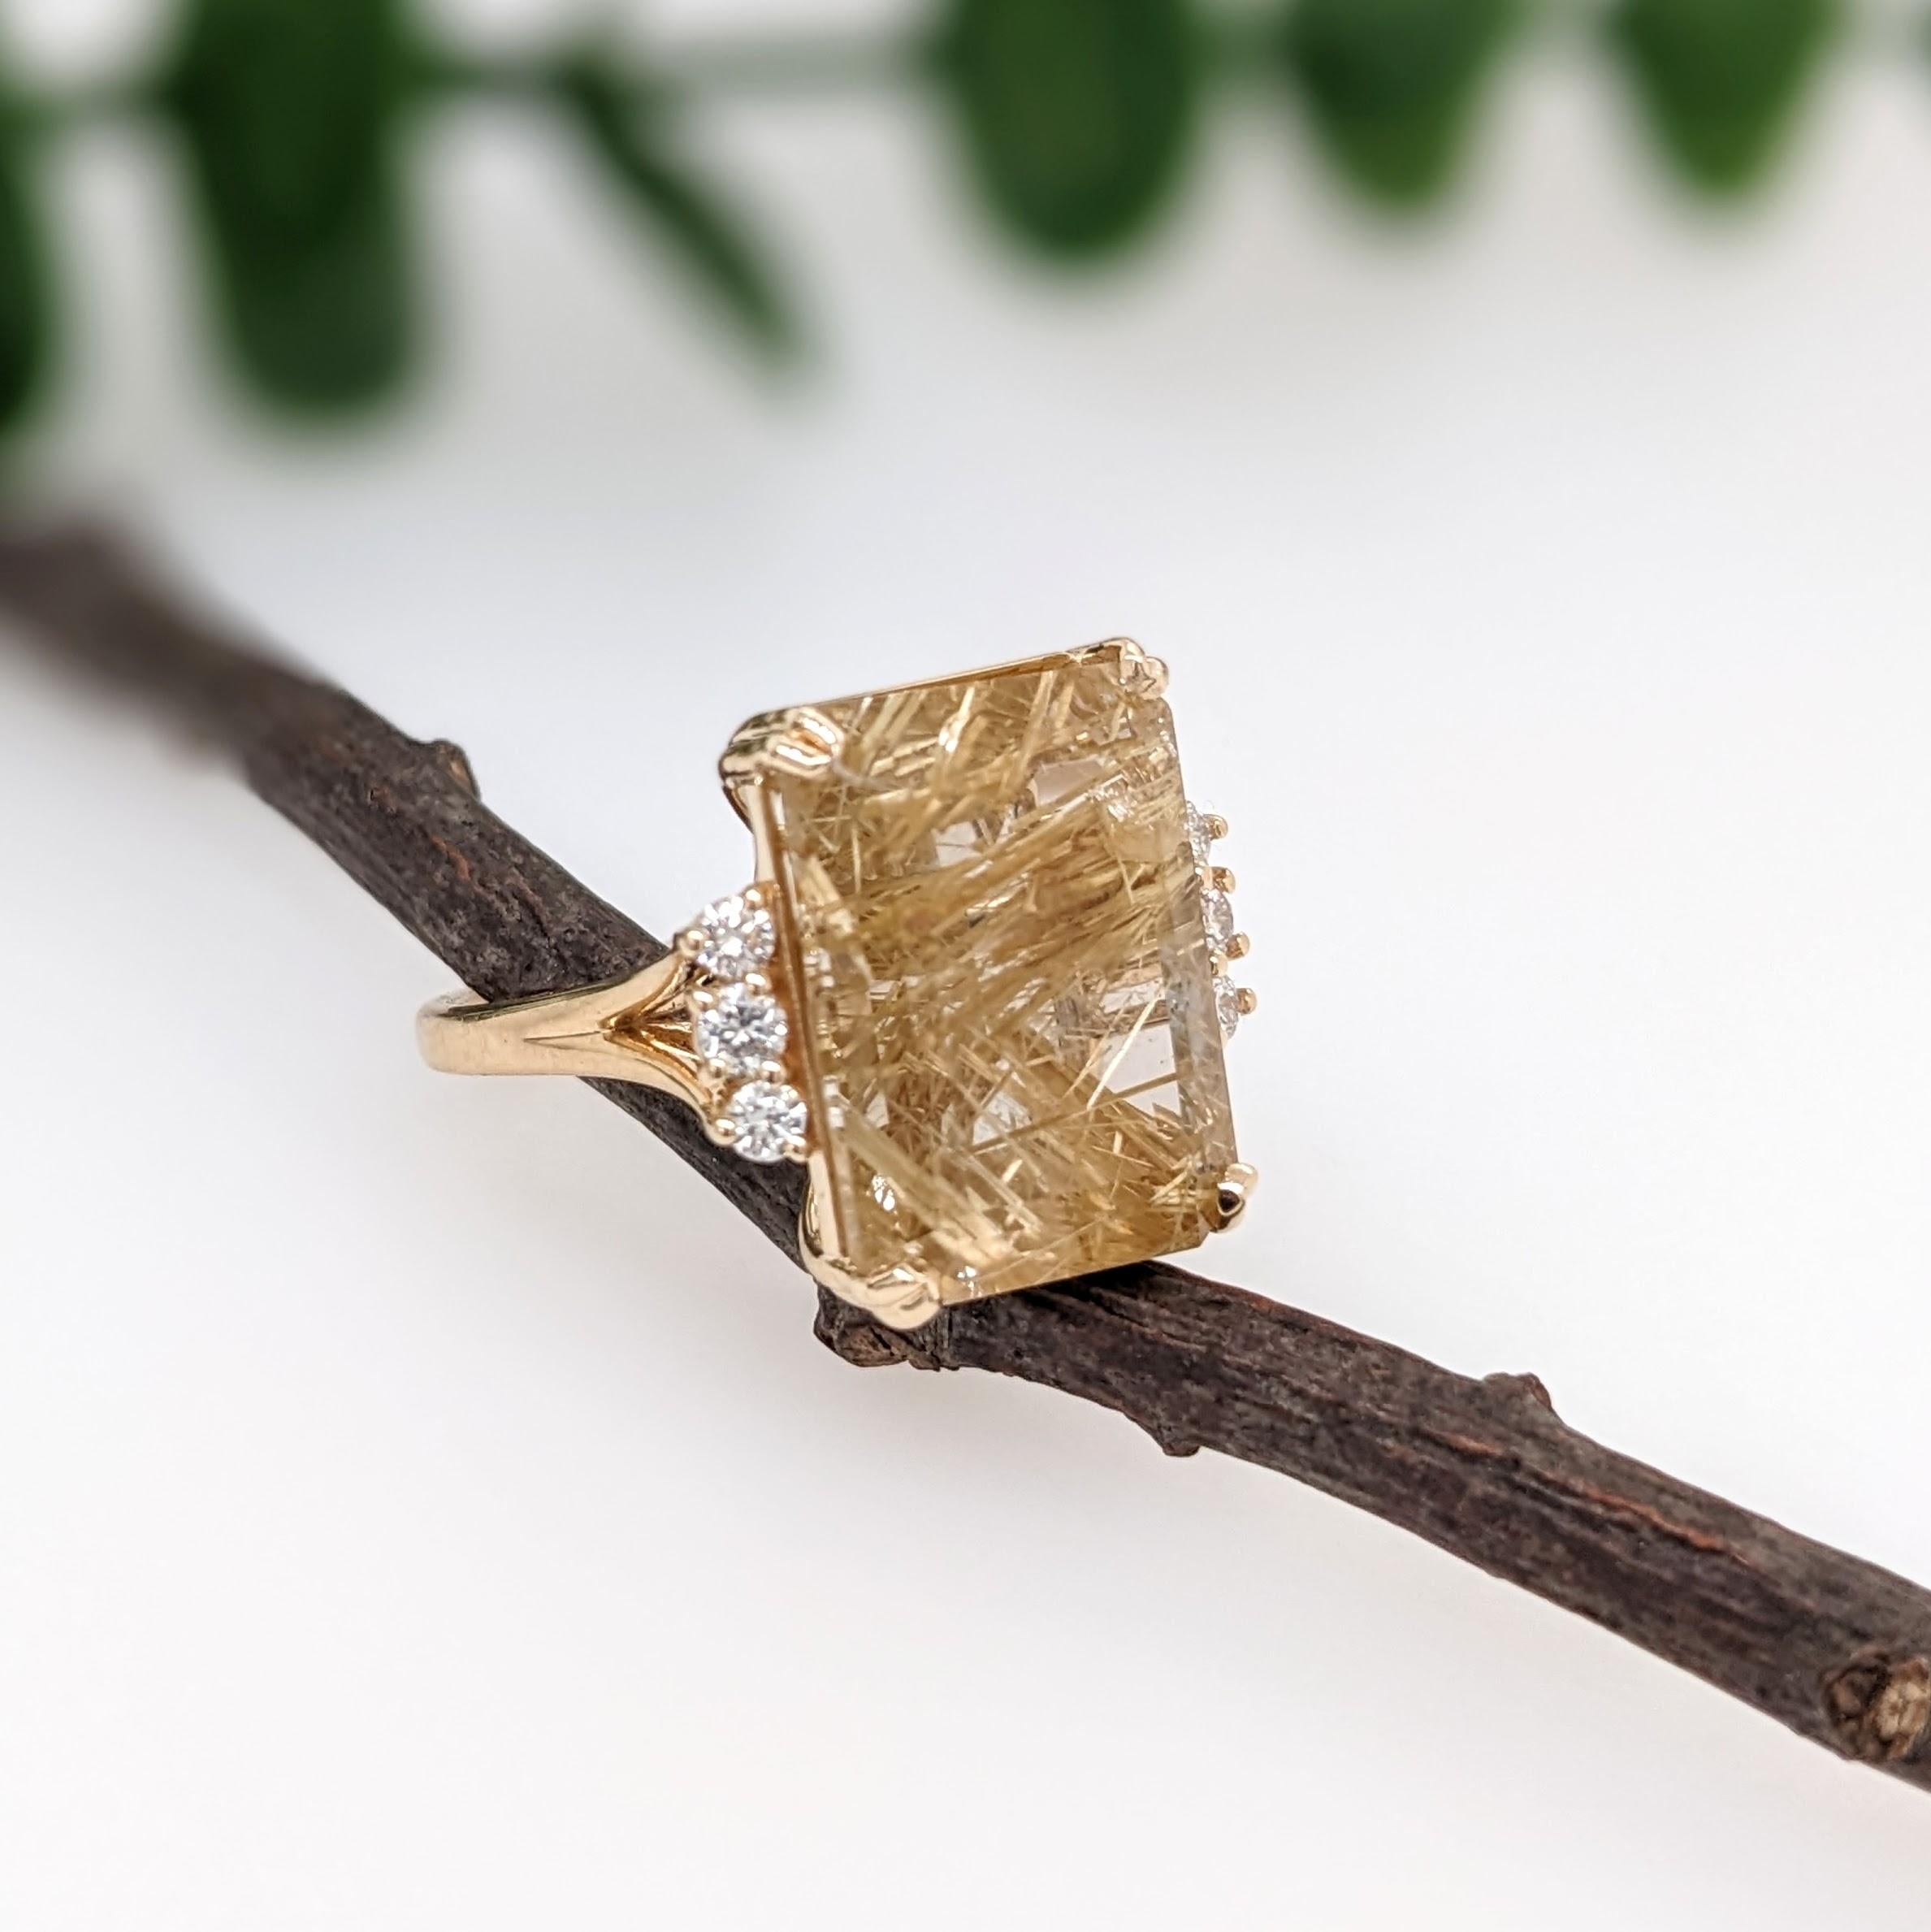 10.31ct Golden Rutile Quartz w Diamond Accents in 14K Gold Emerald Cut 16x12mm 1